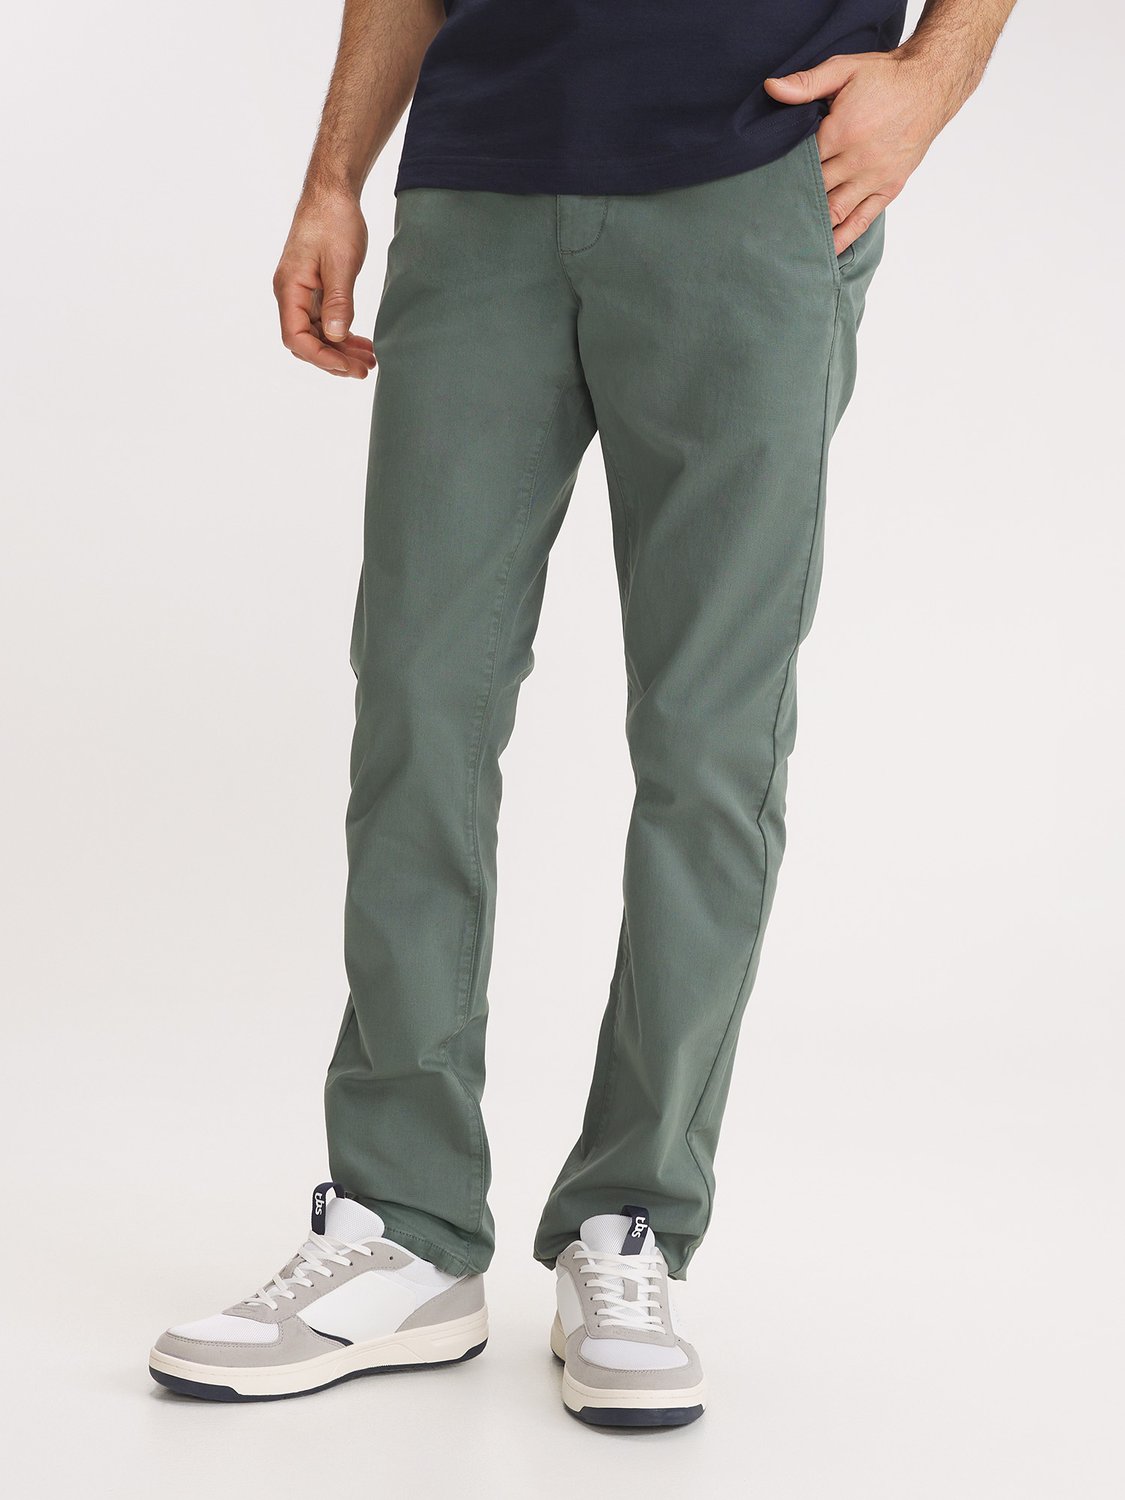 Pantalon Chino Homme Vert